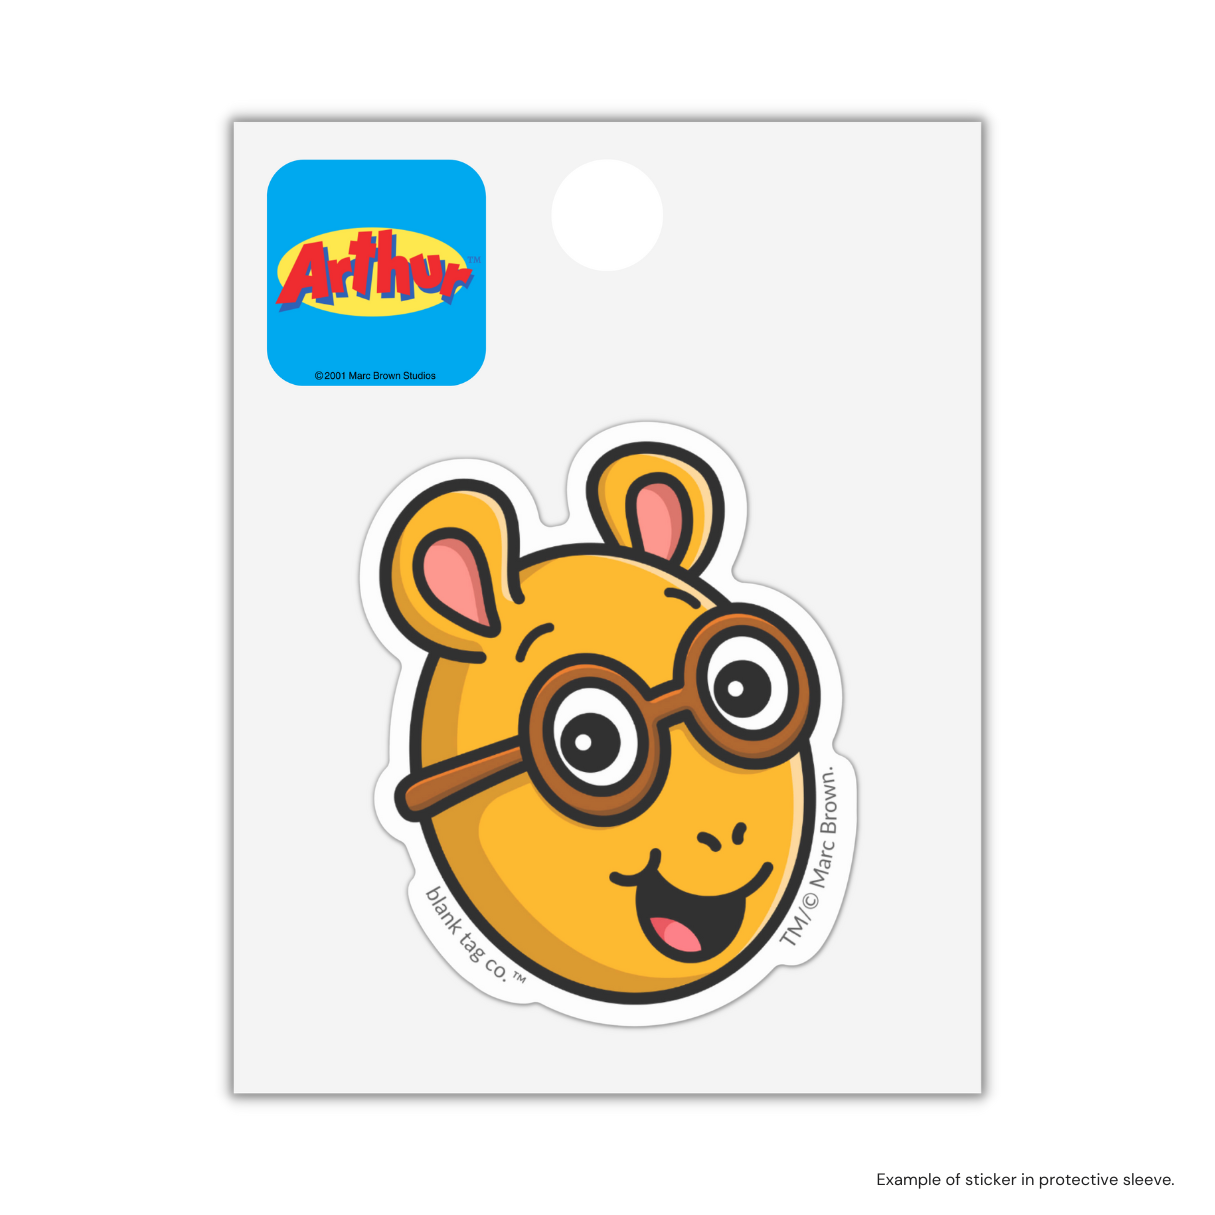 The Arthur Face Sticker